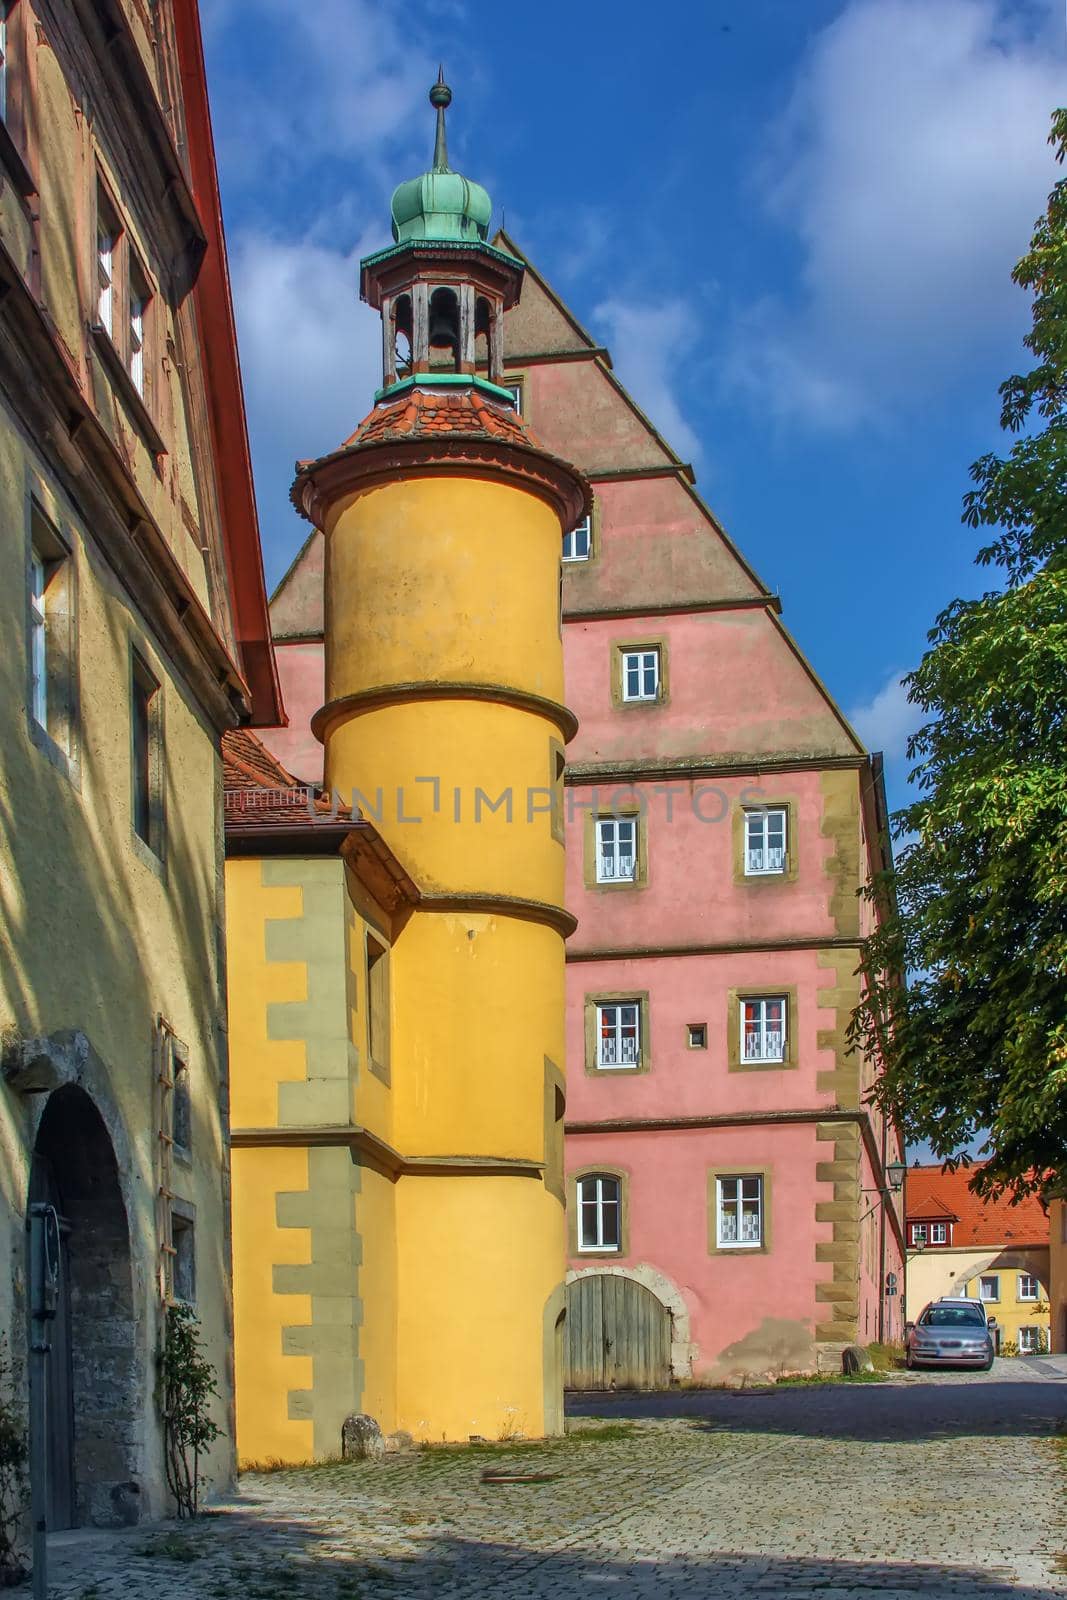 Tower of Hegereiterhaus, Rothenburg ob der Tauber, Germany by borisb17